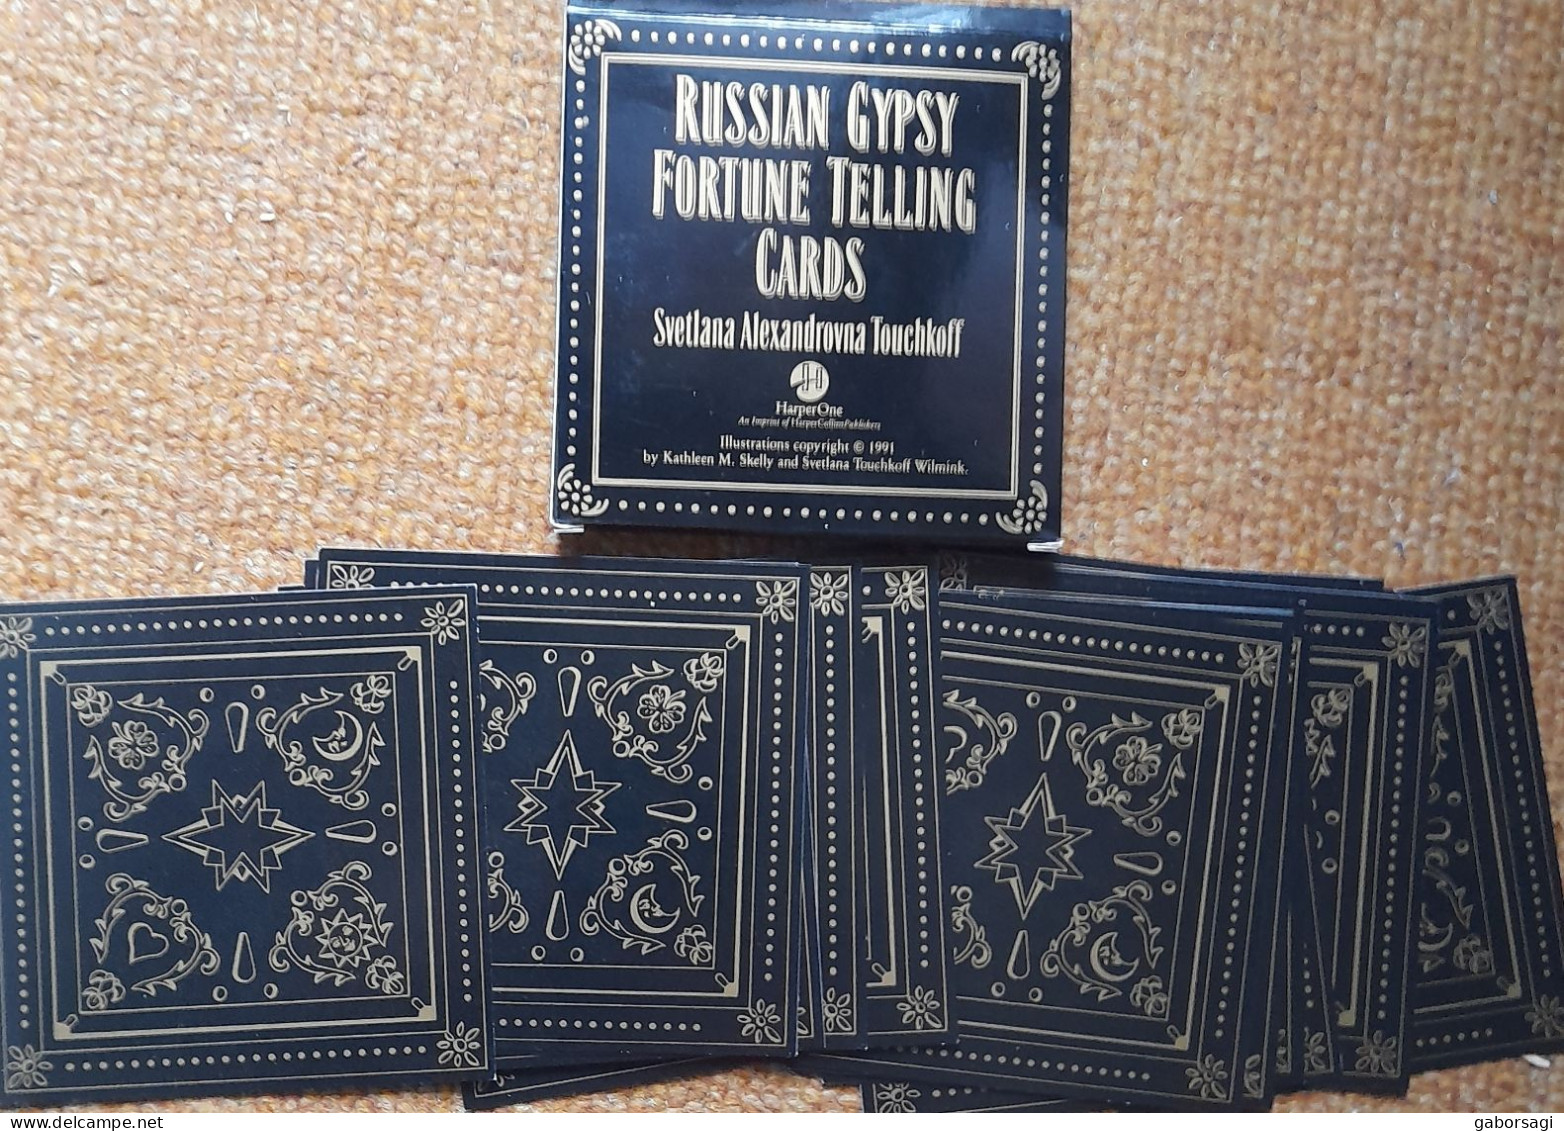 Russian Gypsy Fortune Telling Card - Svetlana Alexandrovna Touchkoff